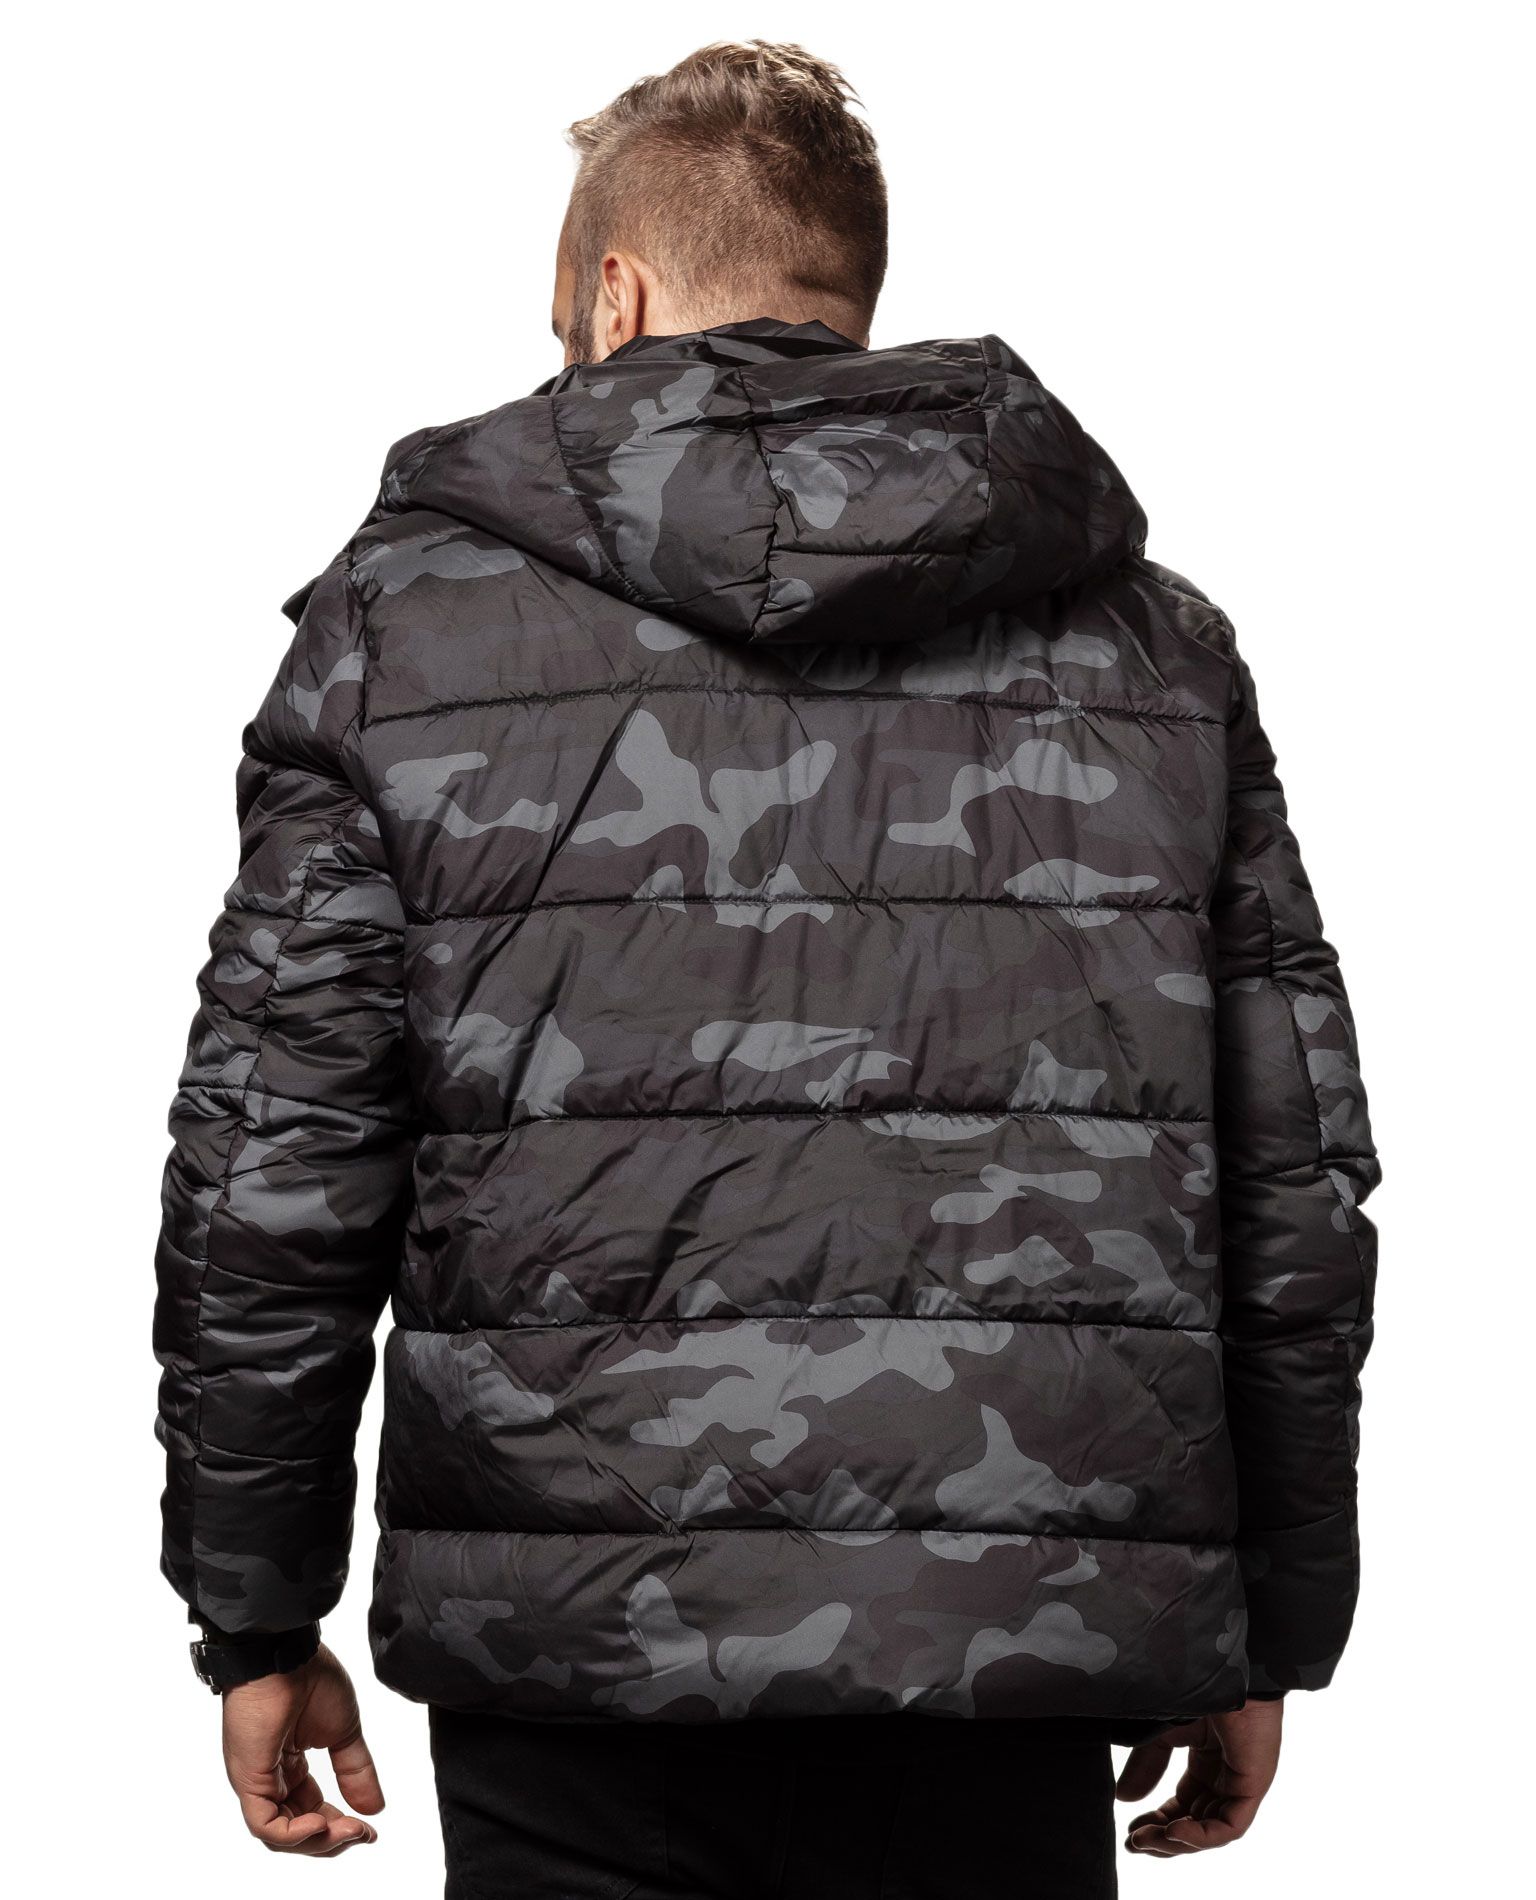 iQKA Women Men Camo Down Jacket Unisex Long Sleeve Glossy Camouflage Zipper Coat with Pockets Oversized Puffer Jackets S-5XL